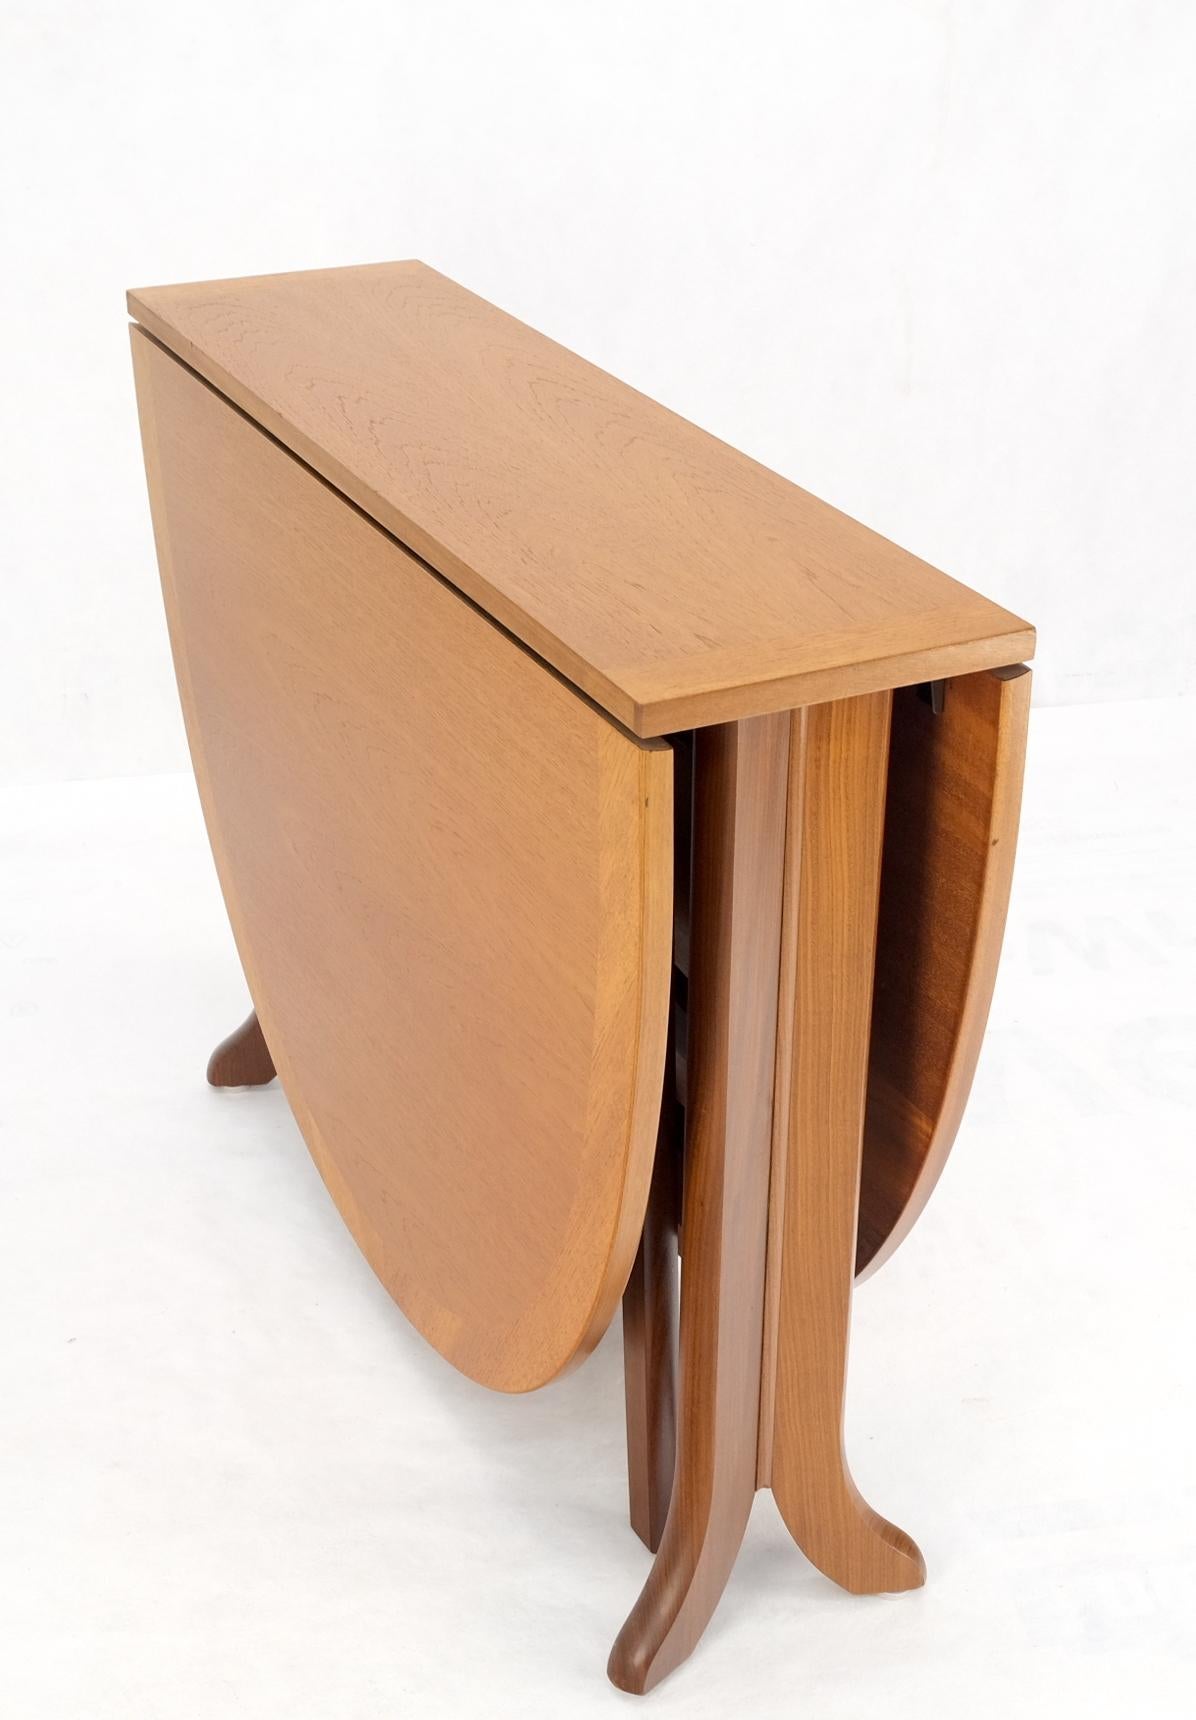 Danish Teak Mid-Century Modern Drop Leaf Gate Leg Dining Table For Sale 5